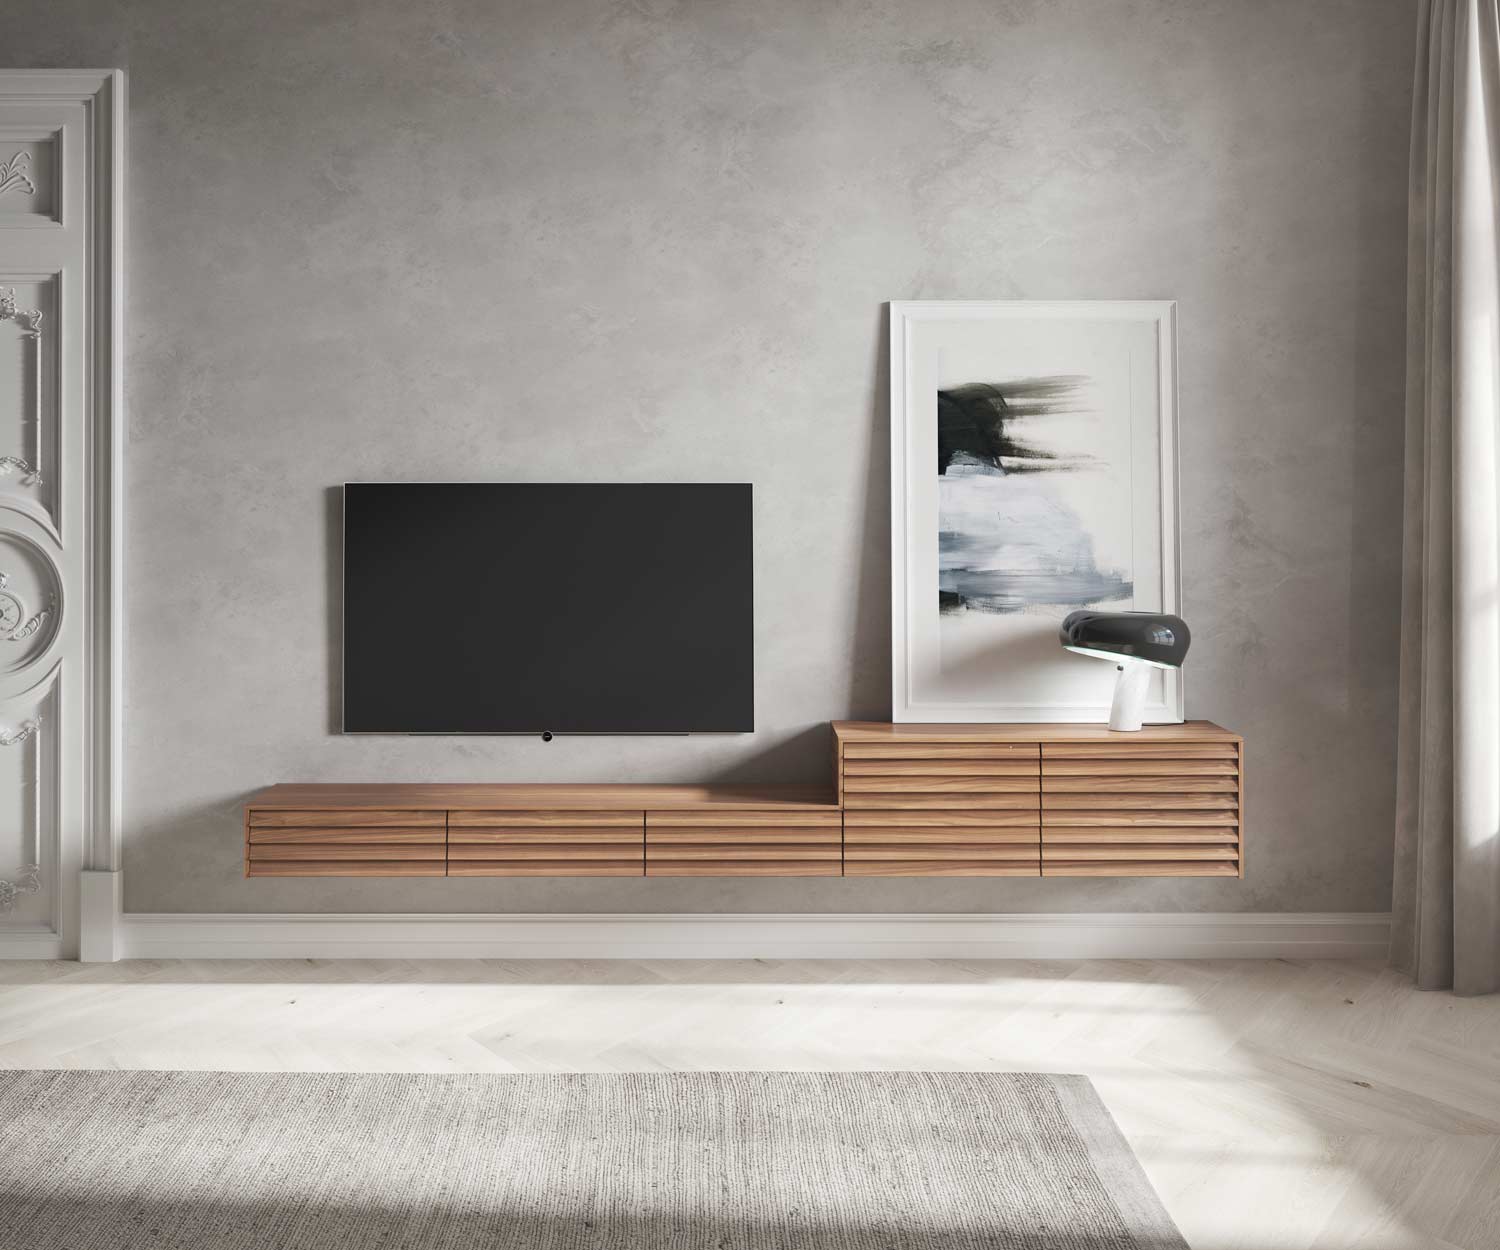 Punt Sussex Design Konfigurator hängendes Design Lowboard an der Wand mit TV